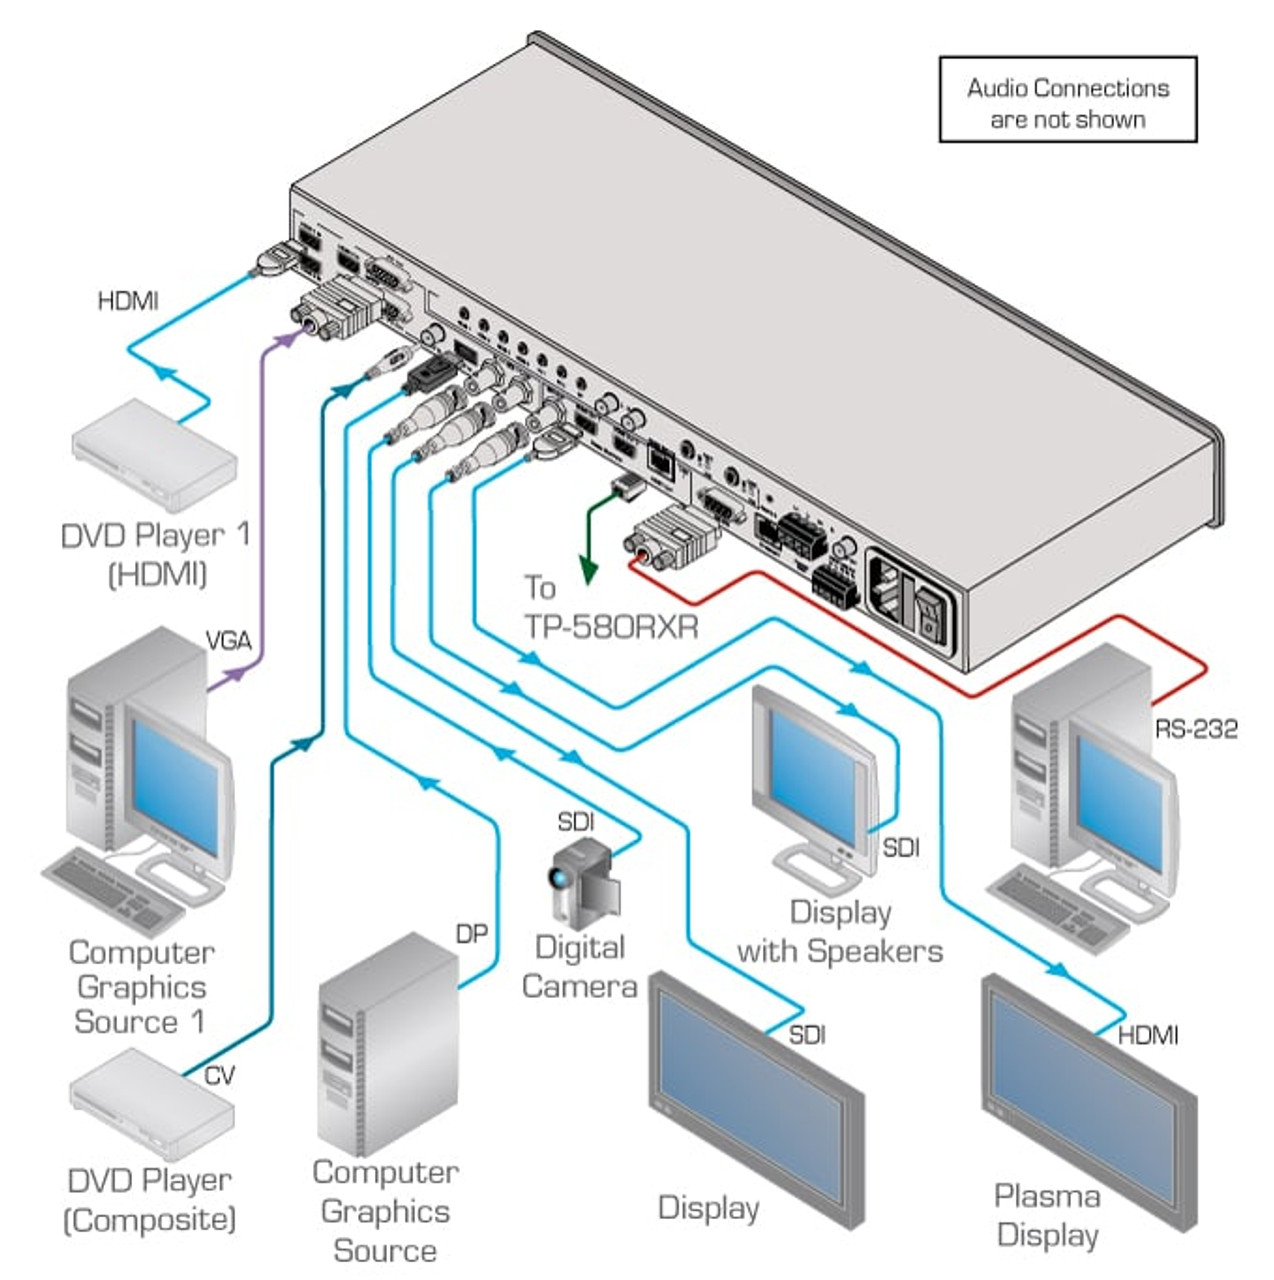 Kramer VP-774A 9-Input HDMI & HDBaseT ProScale Presentation Matrix Switcher